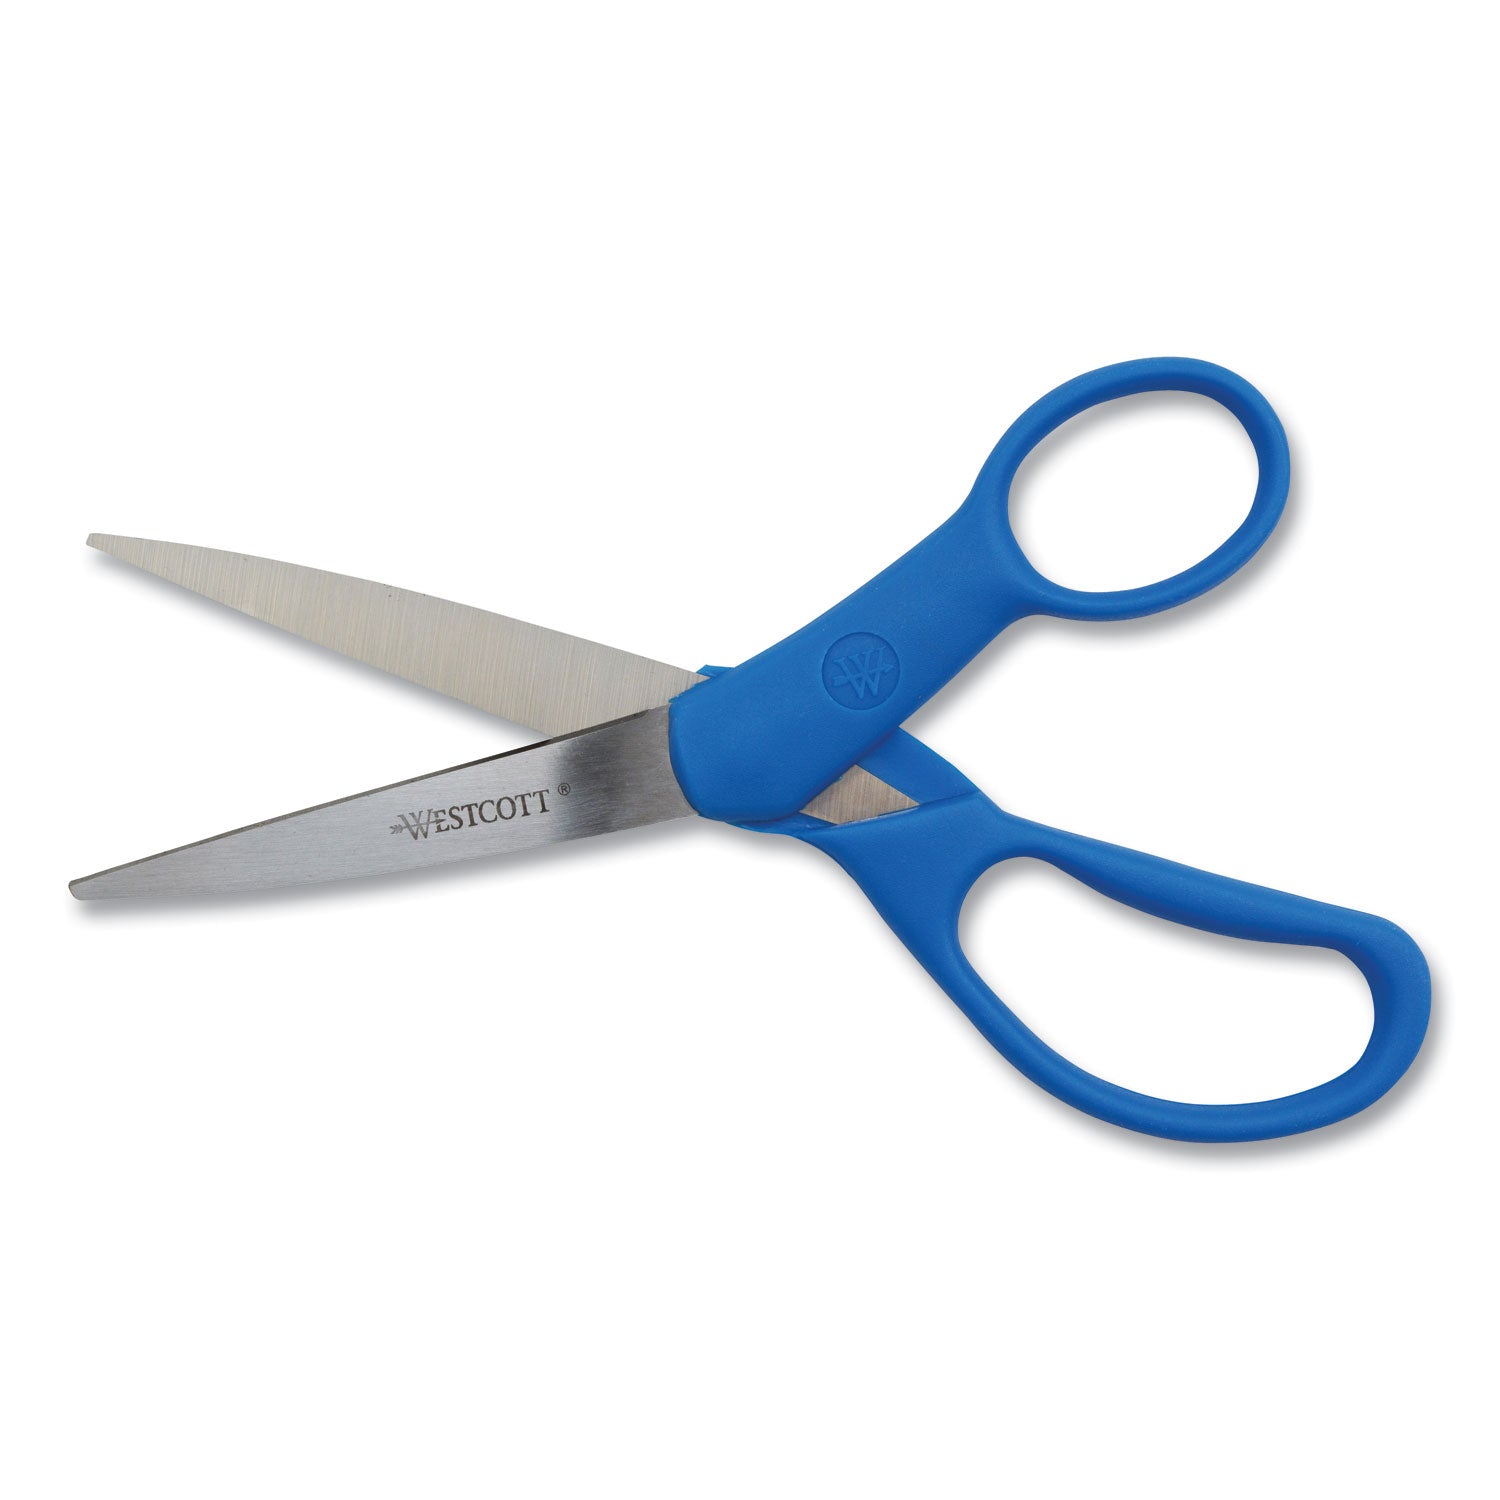 Preferred Line Stainless Steel Scissors, 7" Long, 3.25" Cut Length, Blue Offset Handle - 